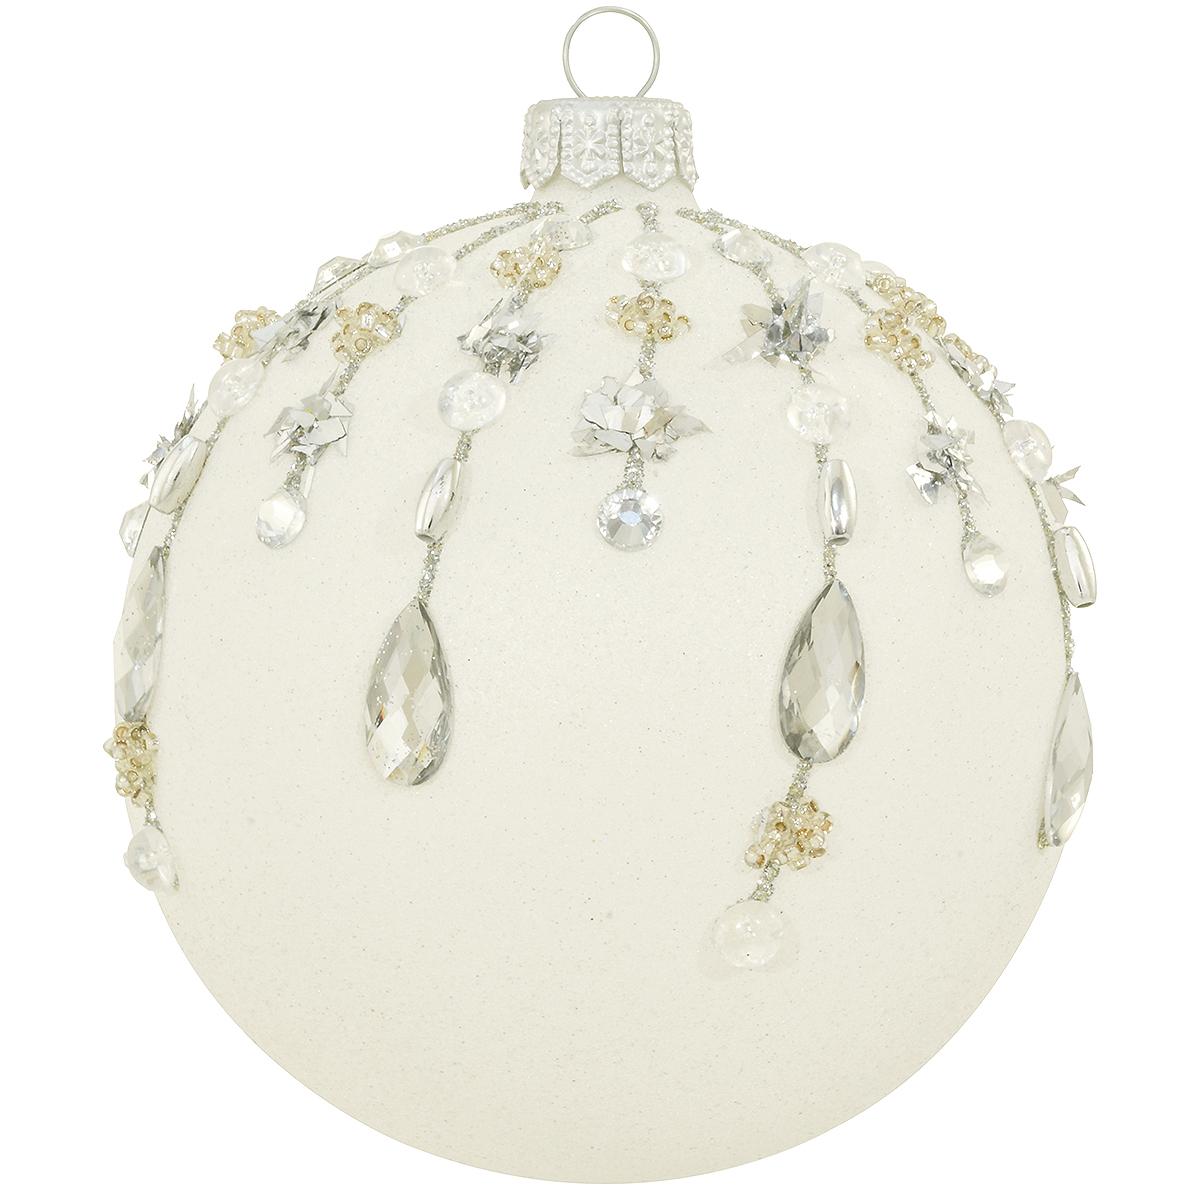 Jewels On Ball 4 Inch Ornament